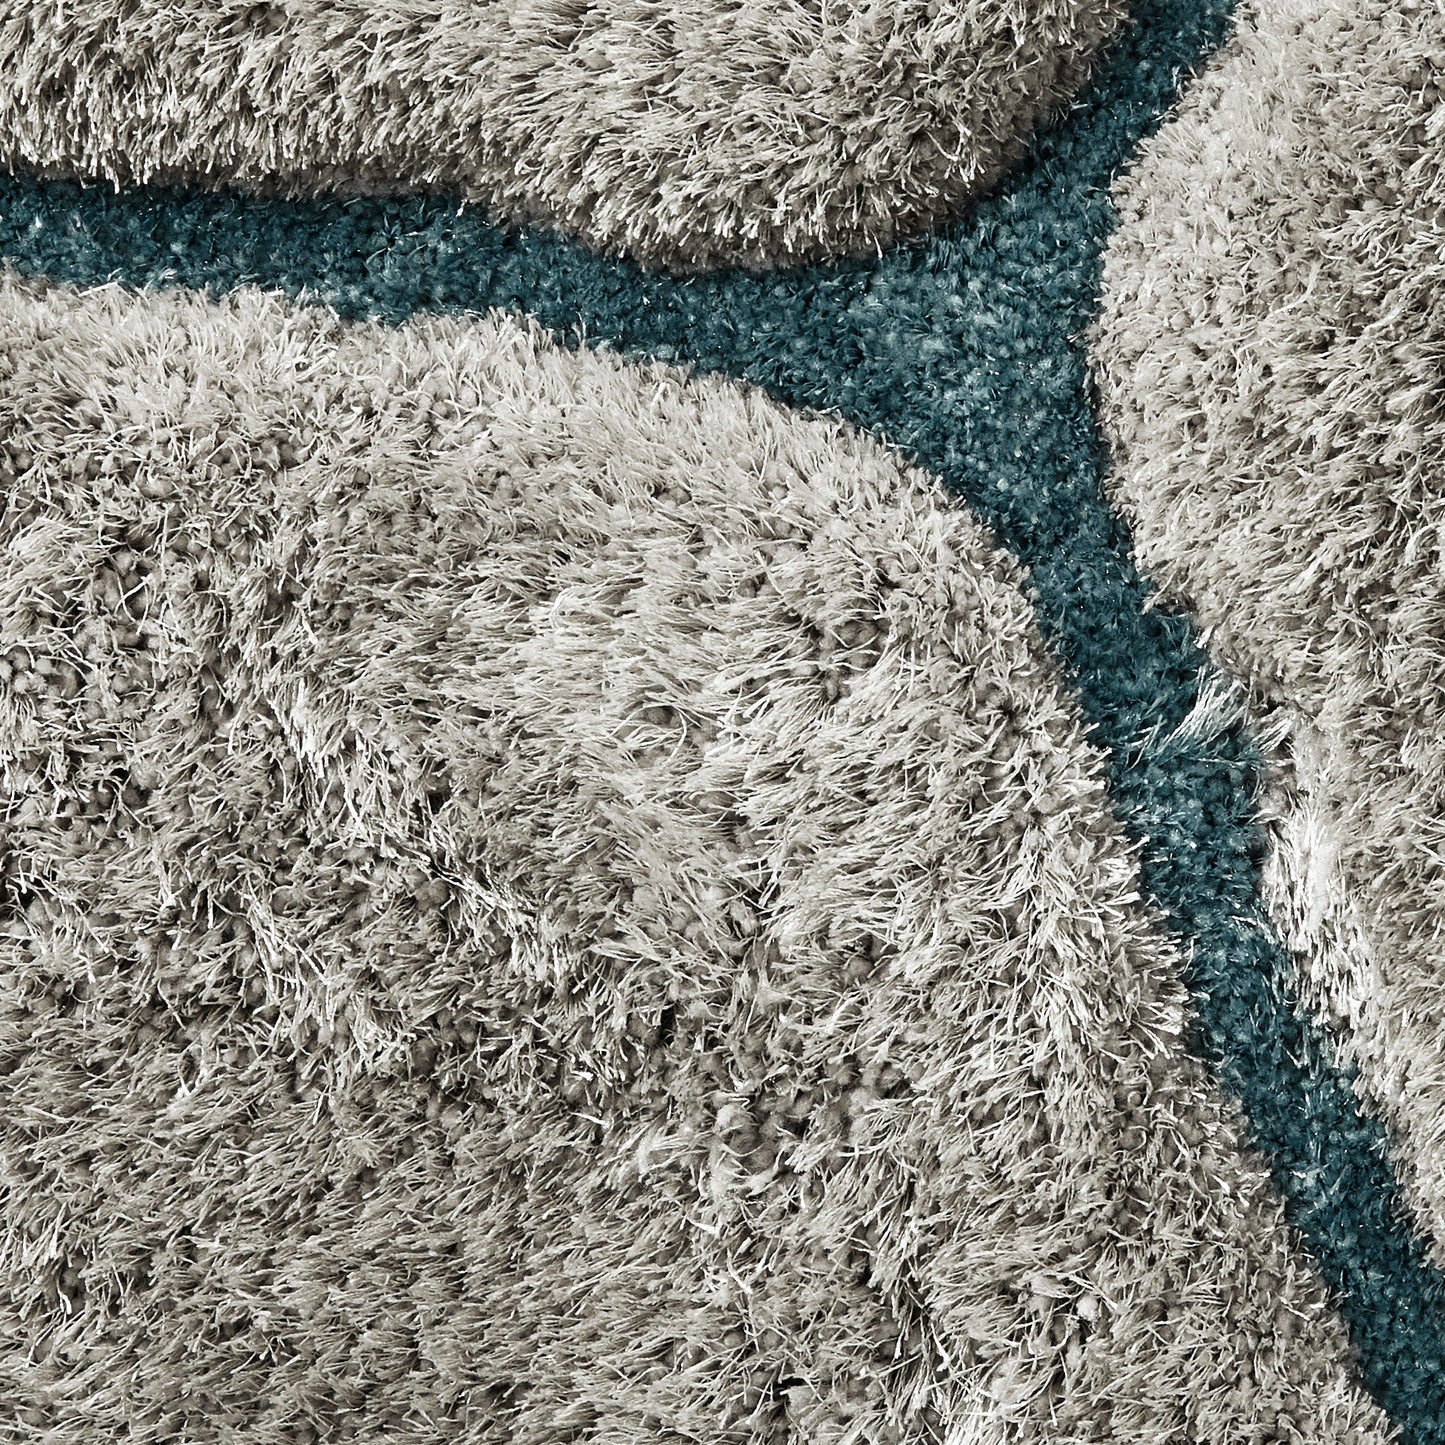 Kashyapa Rugs Collection - Grey & Aqua Geometric Hexagon Design Hand Tufted Modern Floor Rug